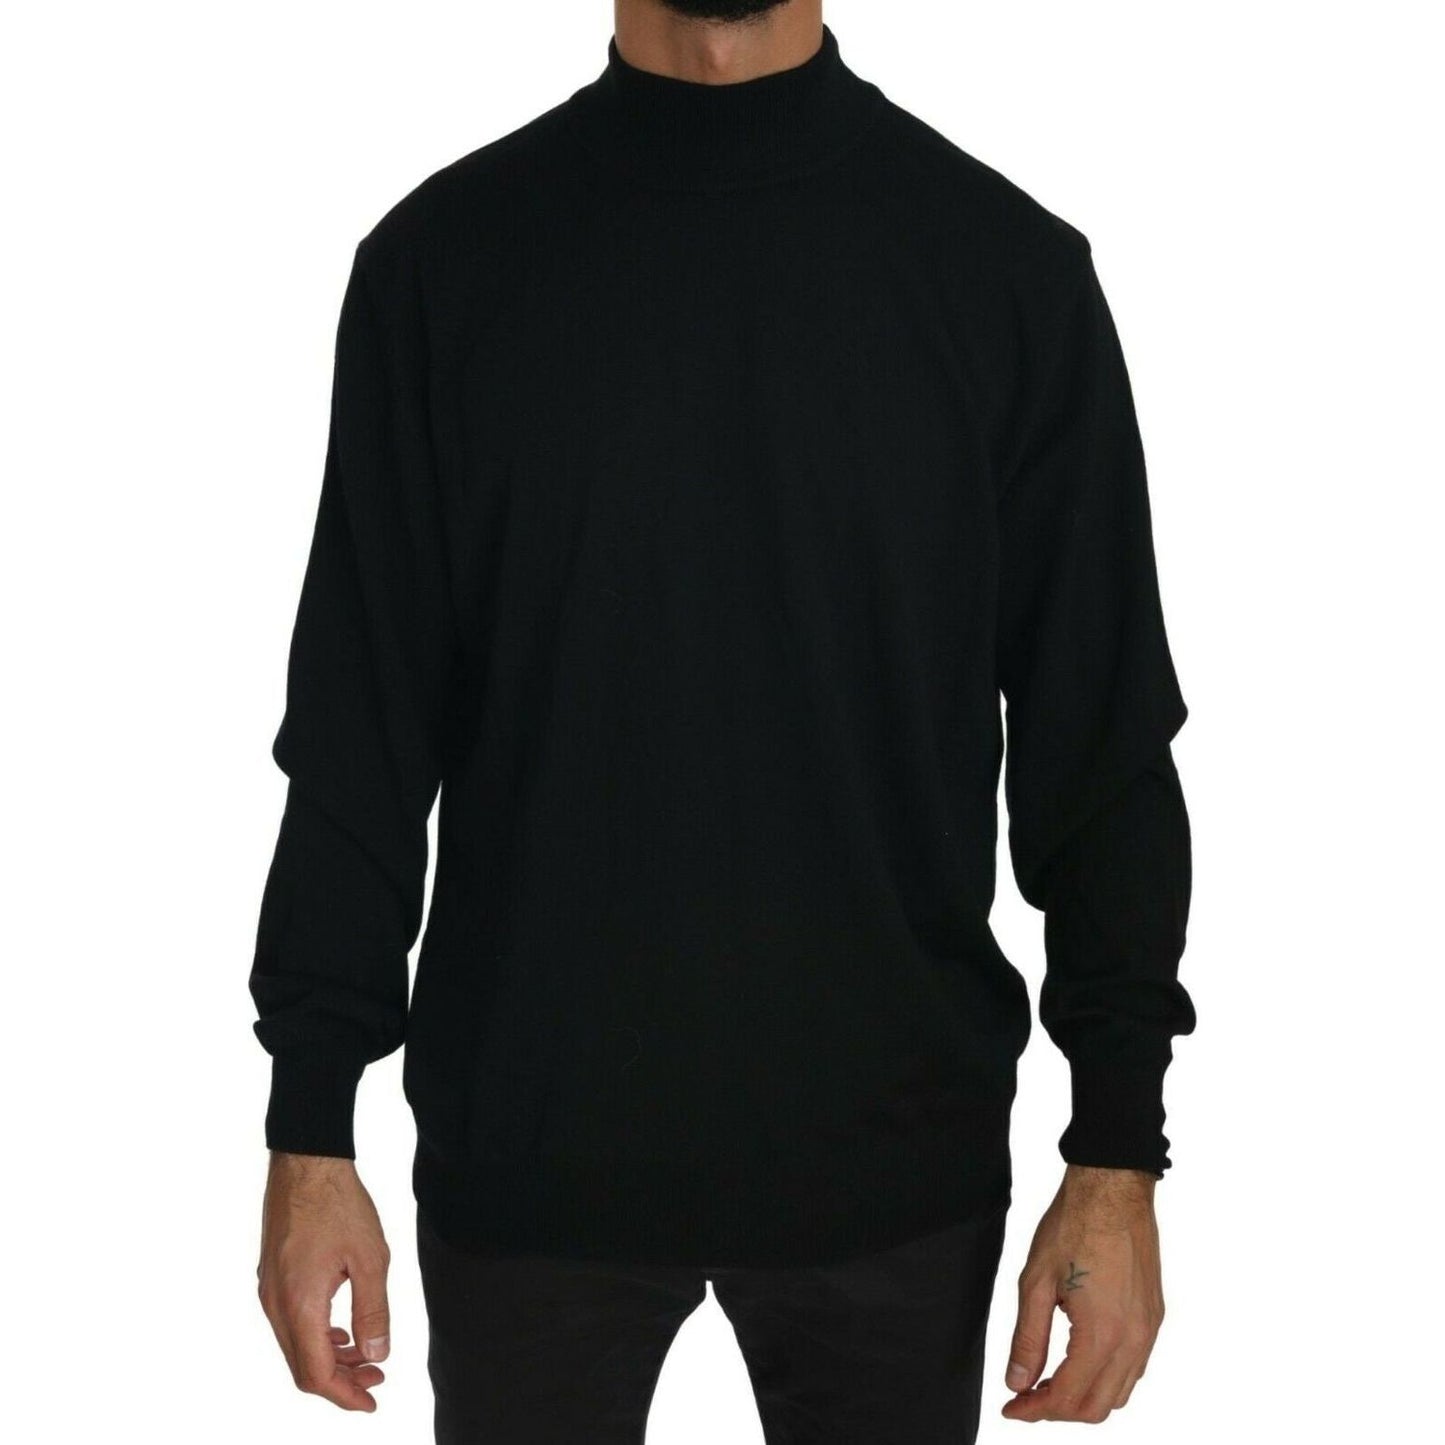 MILA SCHÖN Elegant Black Virgin Wool Pullover Sweater black-turtle-neck-pullover-top-virgin-wool-sweater s-l1600-36-2049cd40-08a.jpg